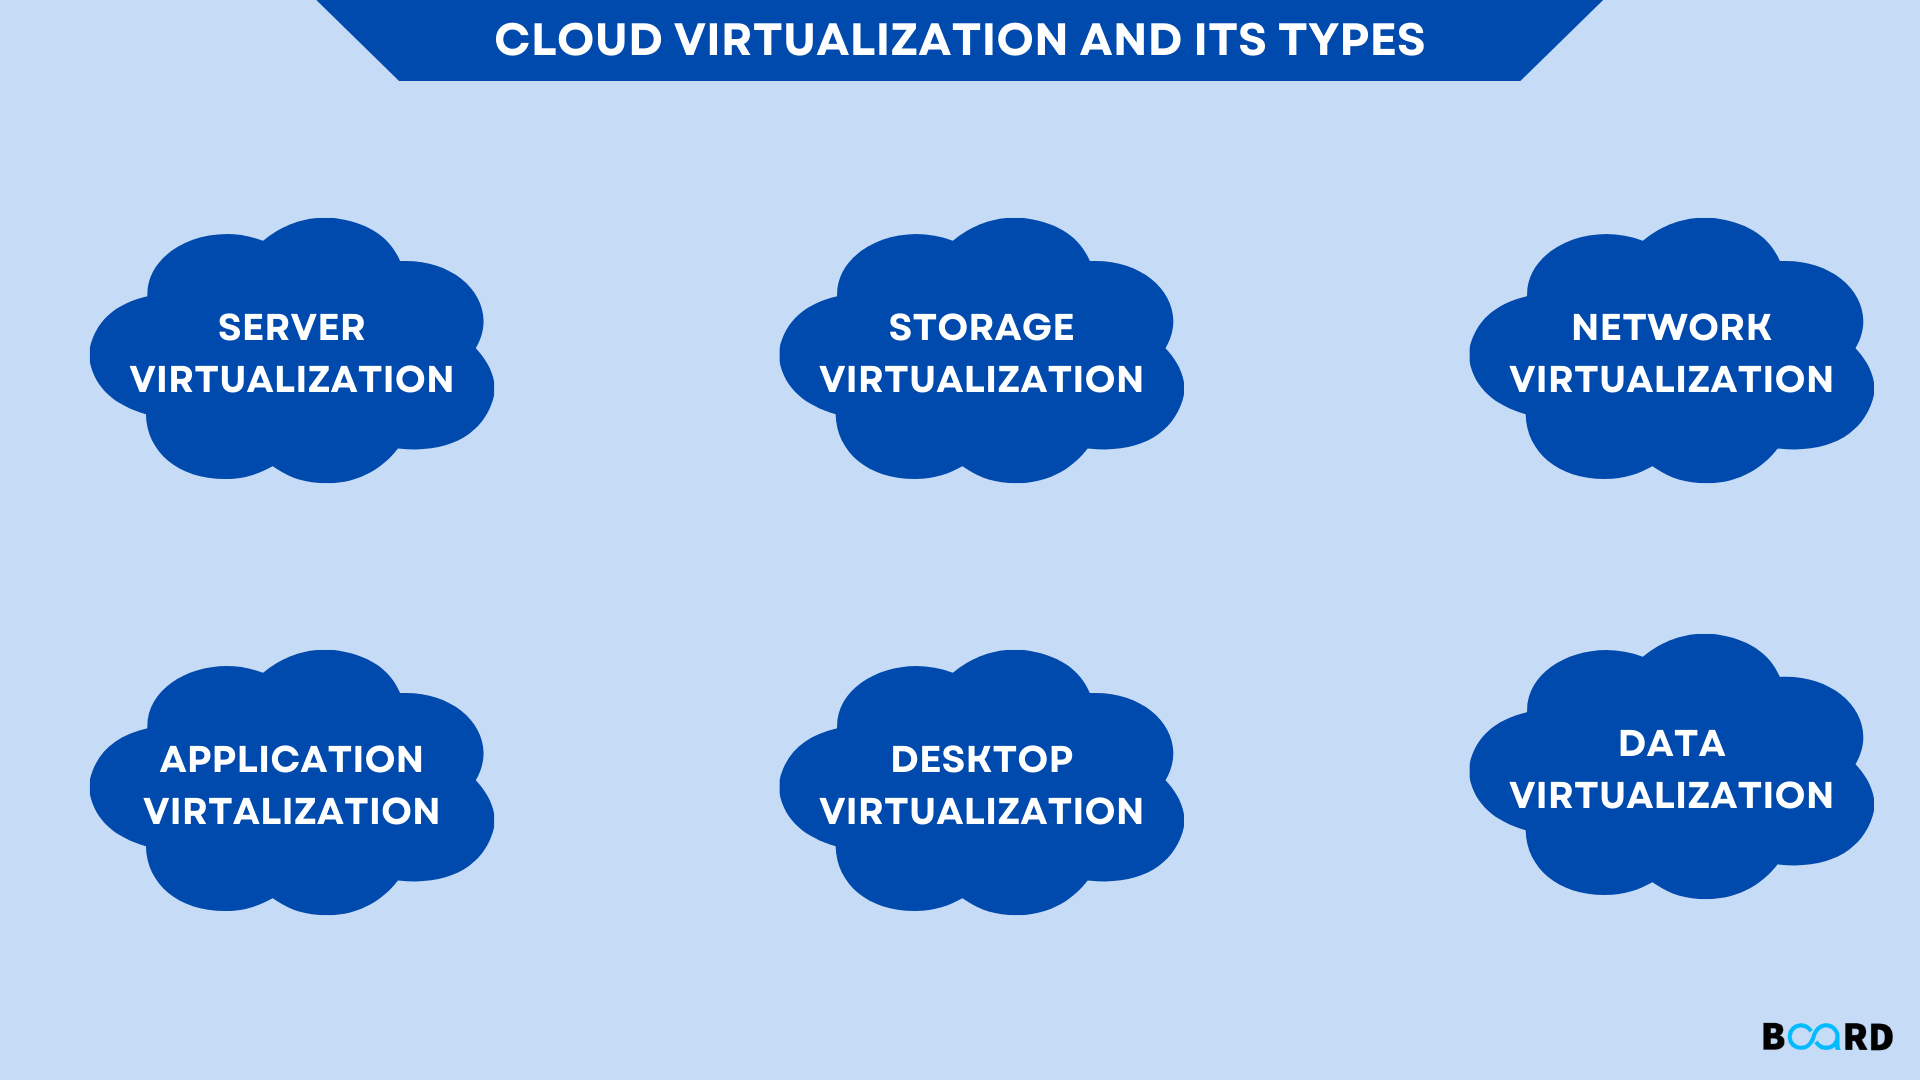 Cloud Computing Virtualizations | Types of Cloud Computing Virtualizations